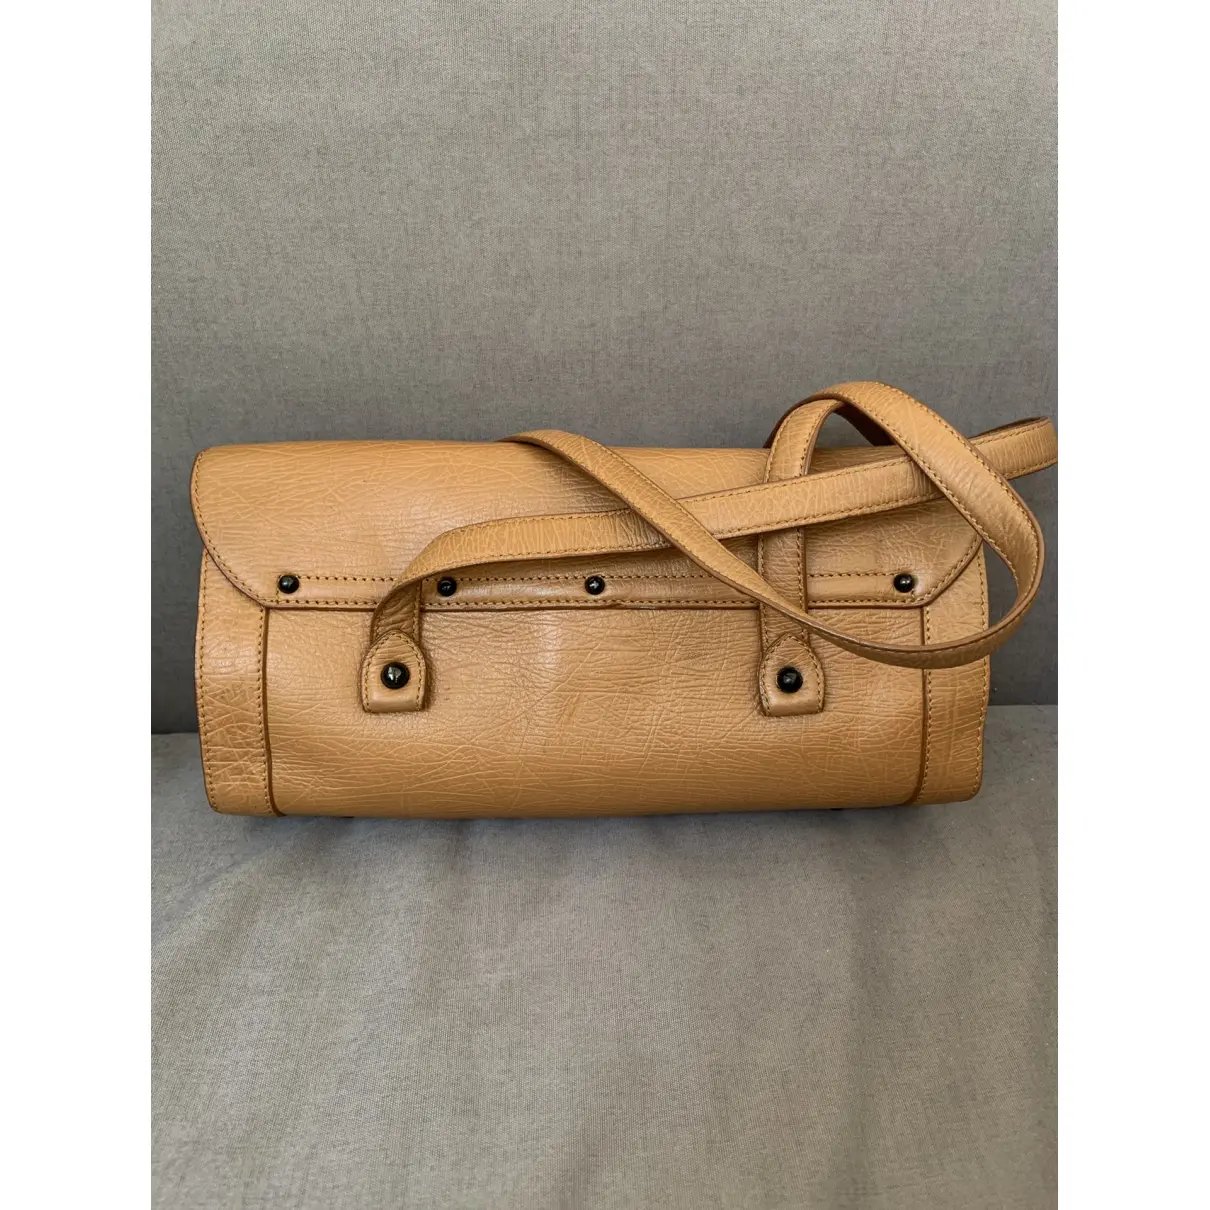 Buy Gucci Bamboo Bullet leather handbag online